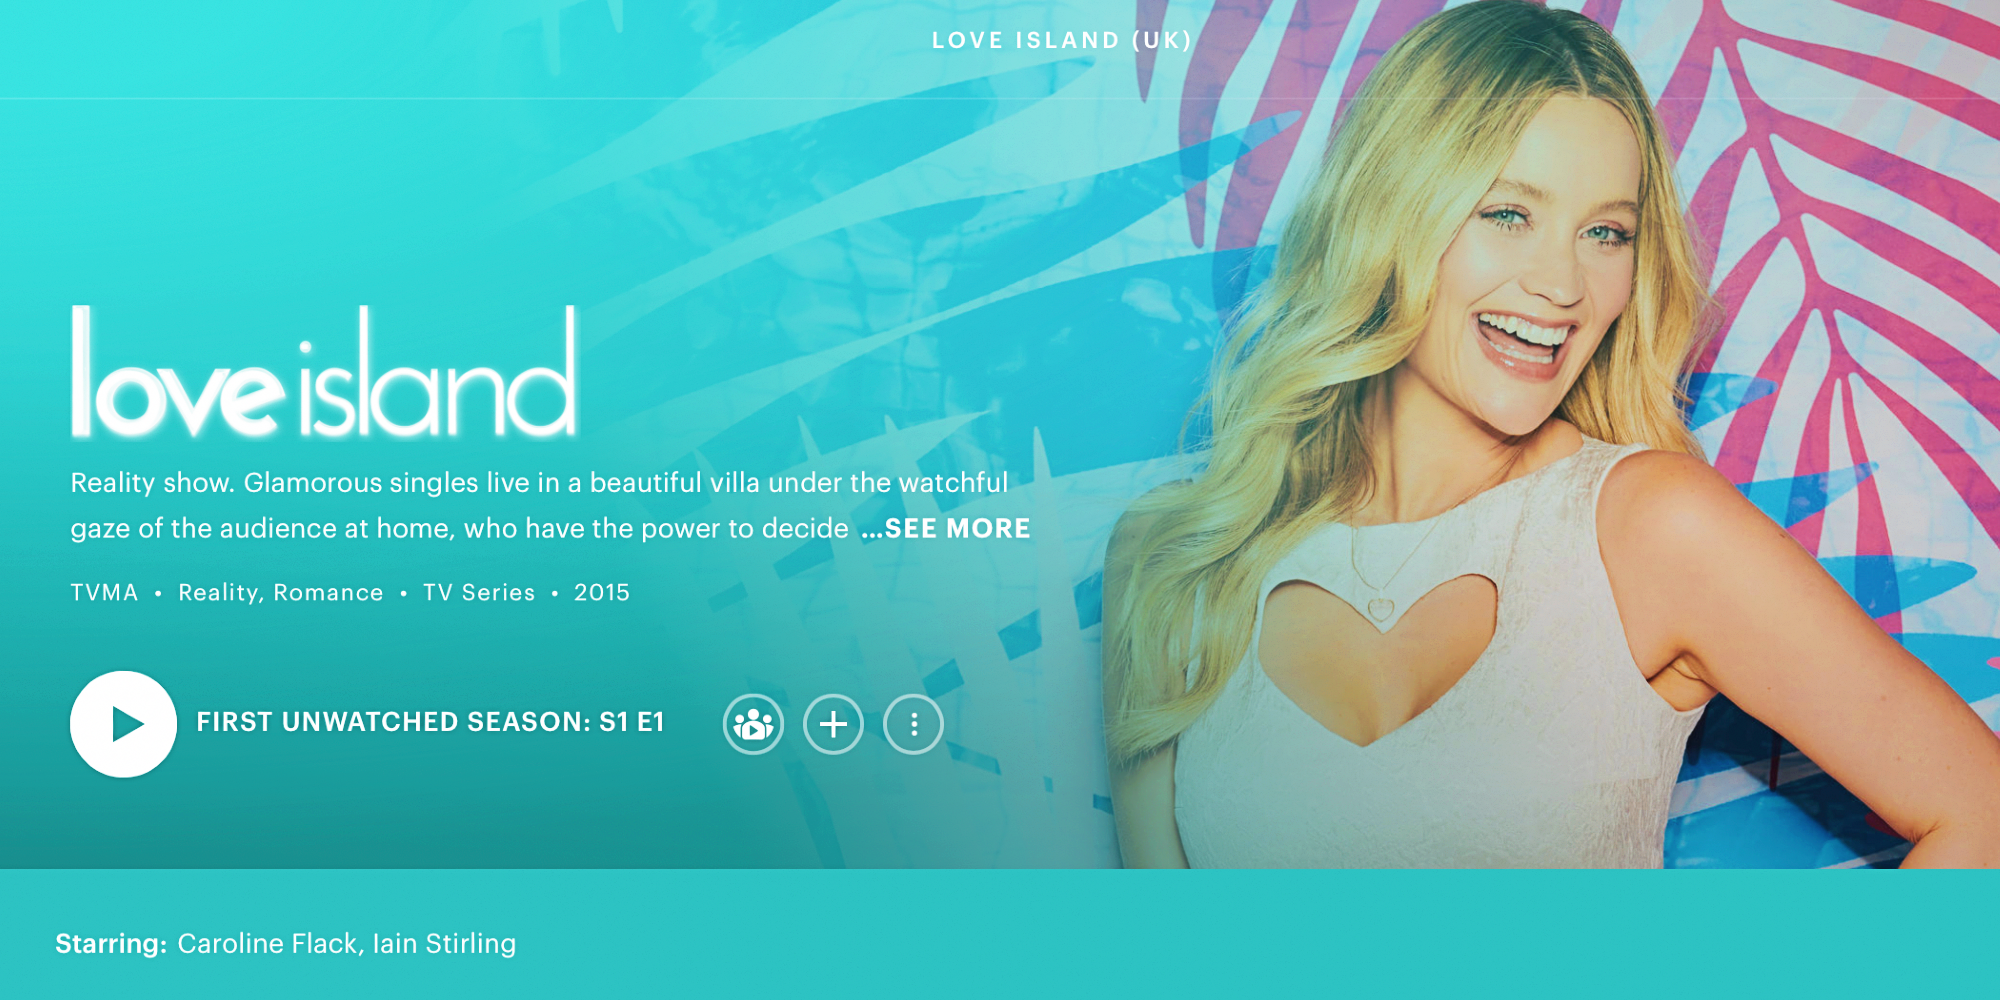 Love Island U.K.'s streaming page on Hulu.com